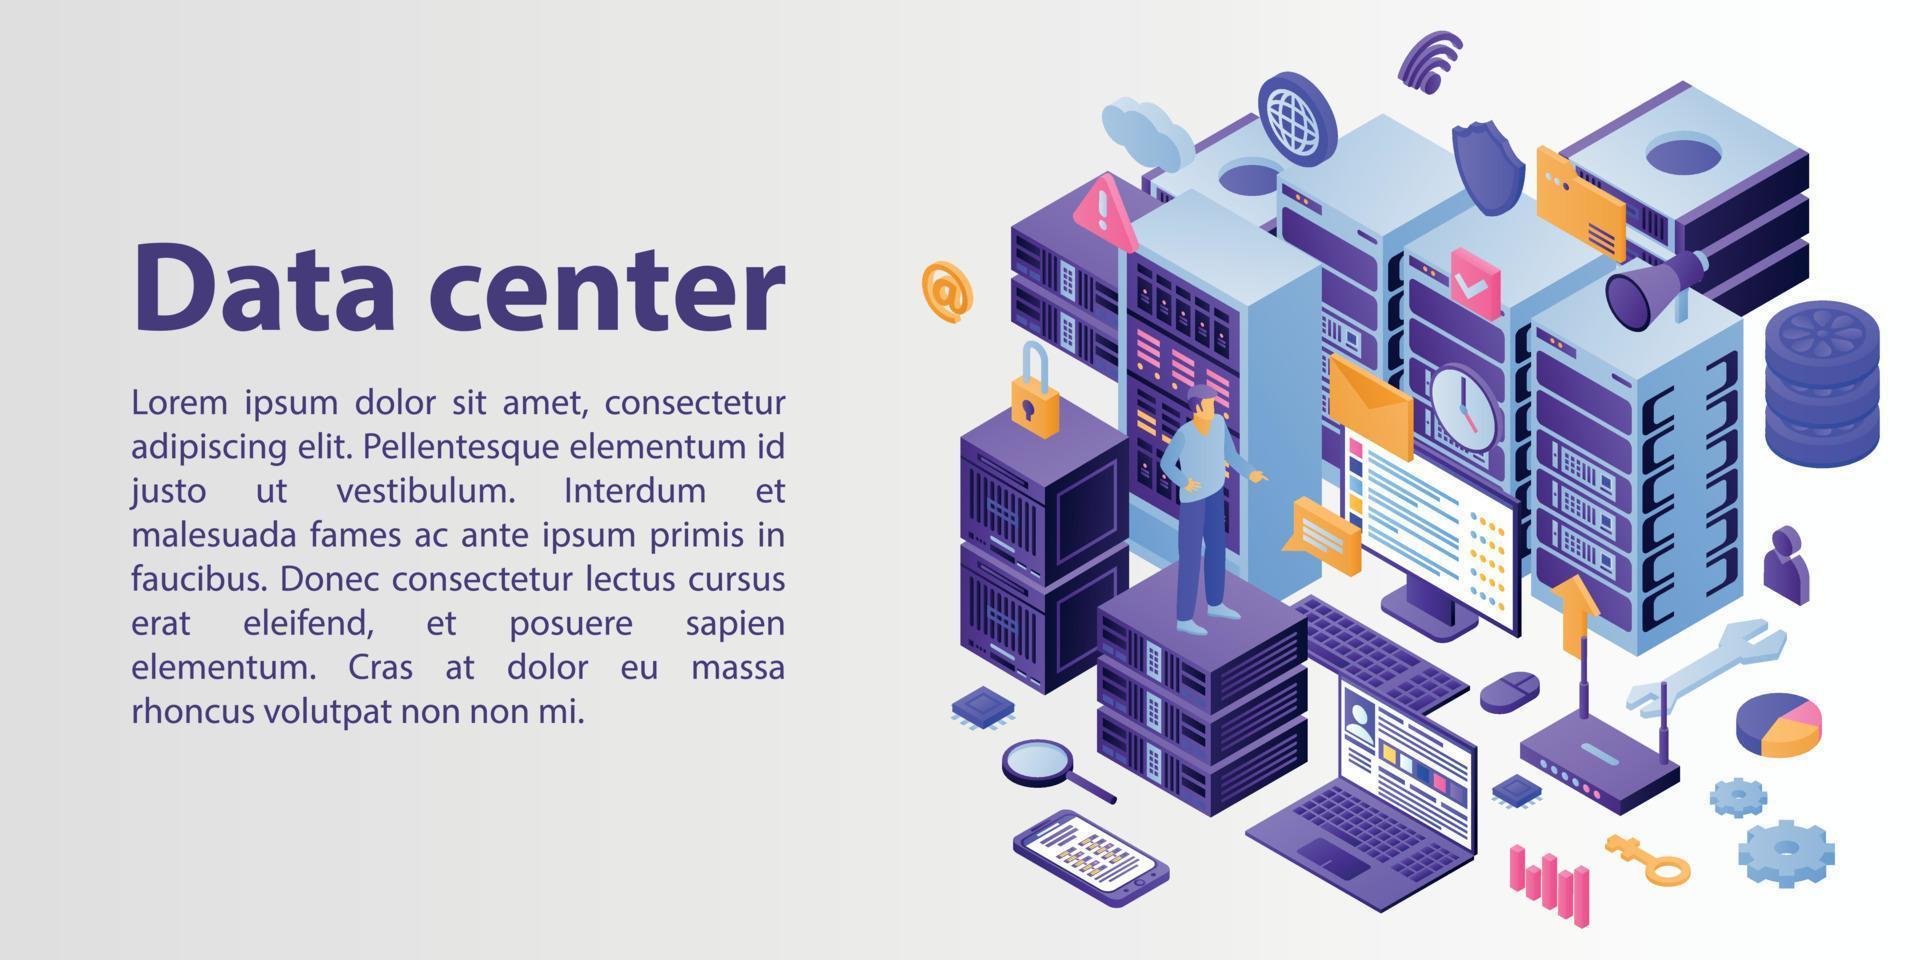 Data center network concept banner, isometric style vector